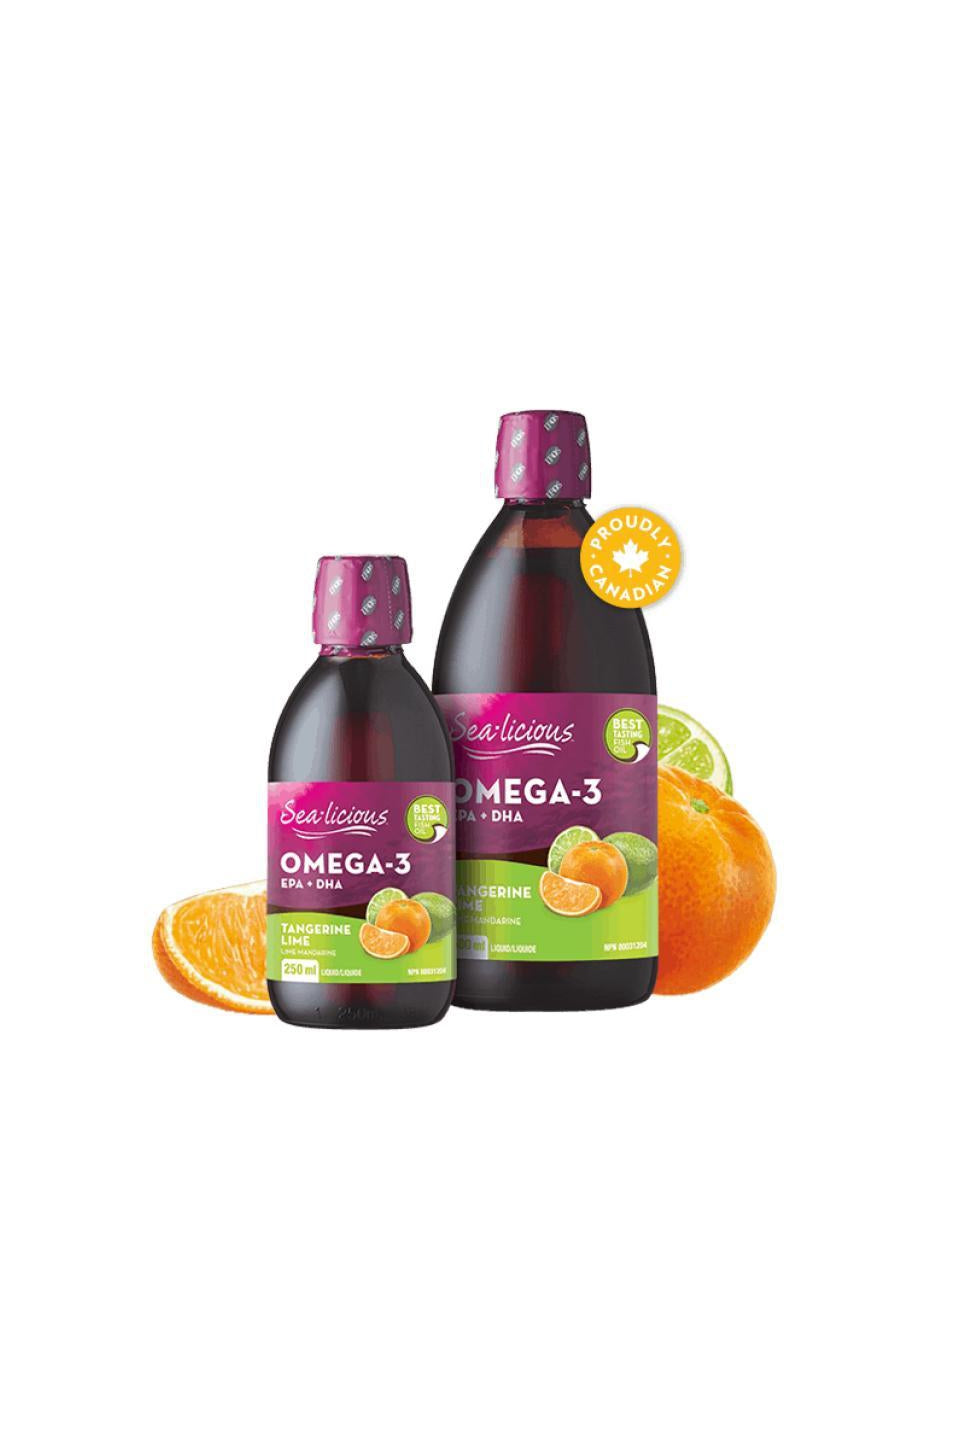 Sealicious Omega-3 EPA + DHA - Tangerine Lime 500ml